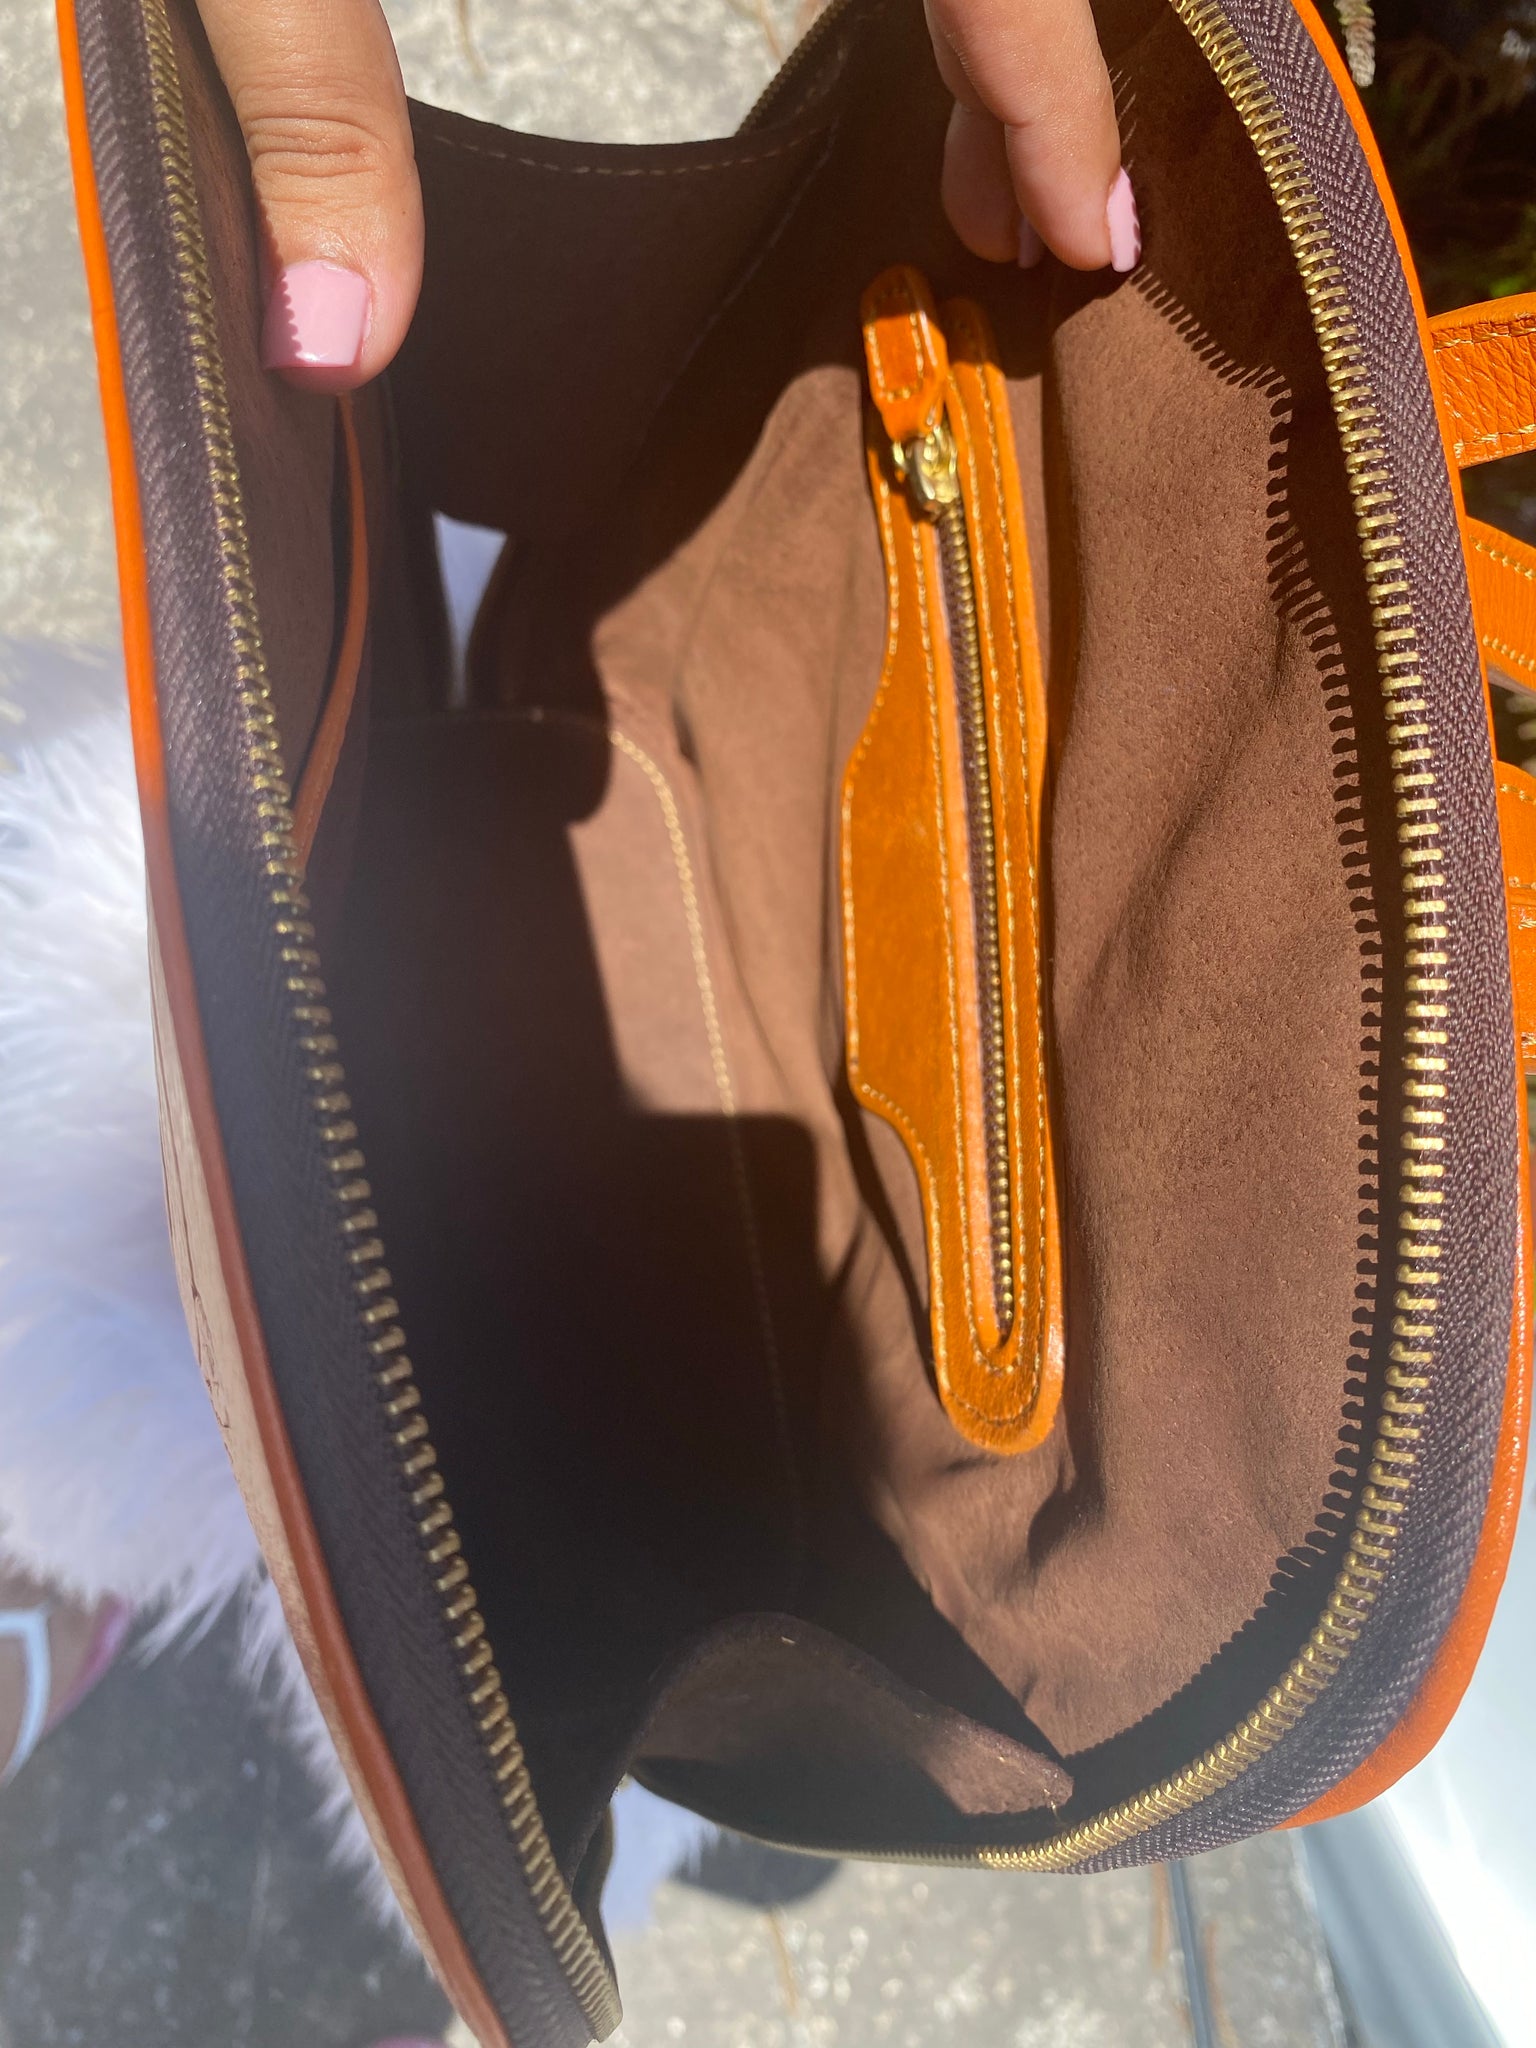 Ellipse leather backpack